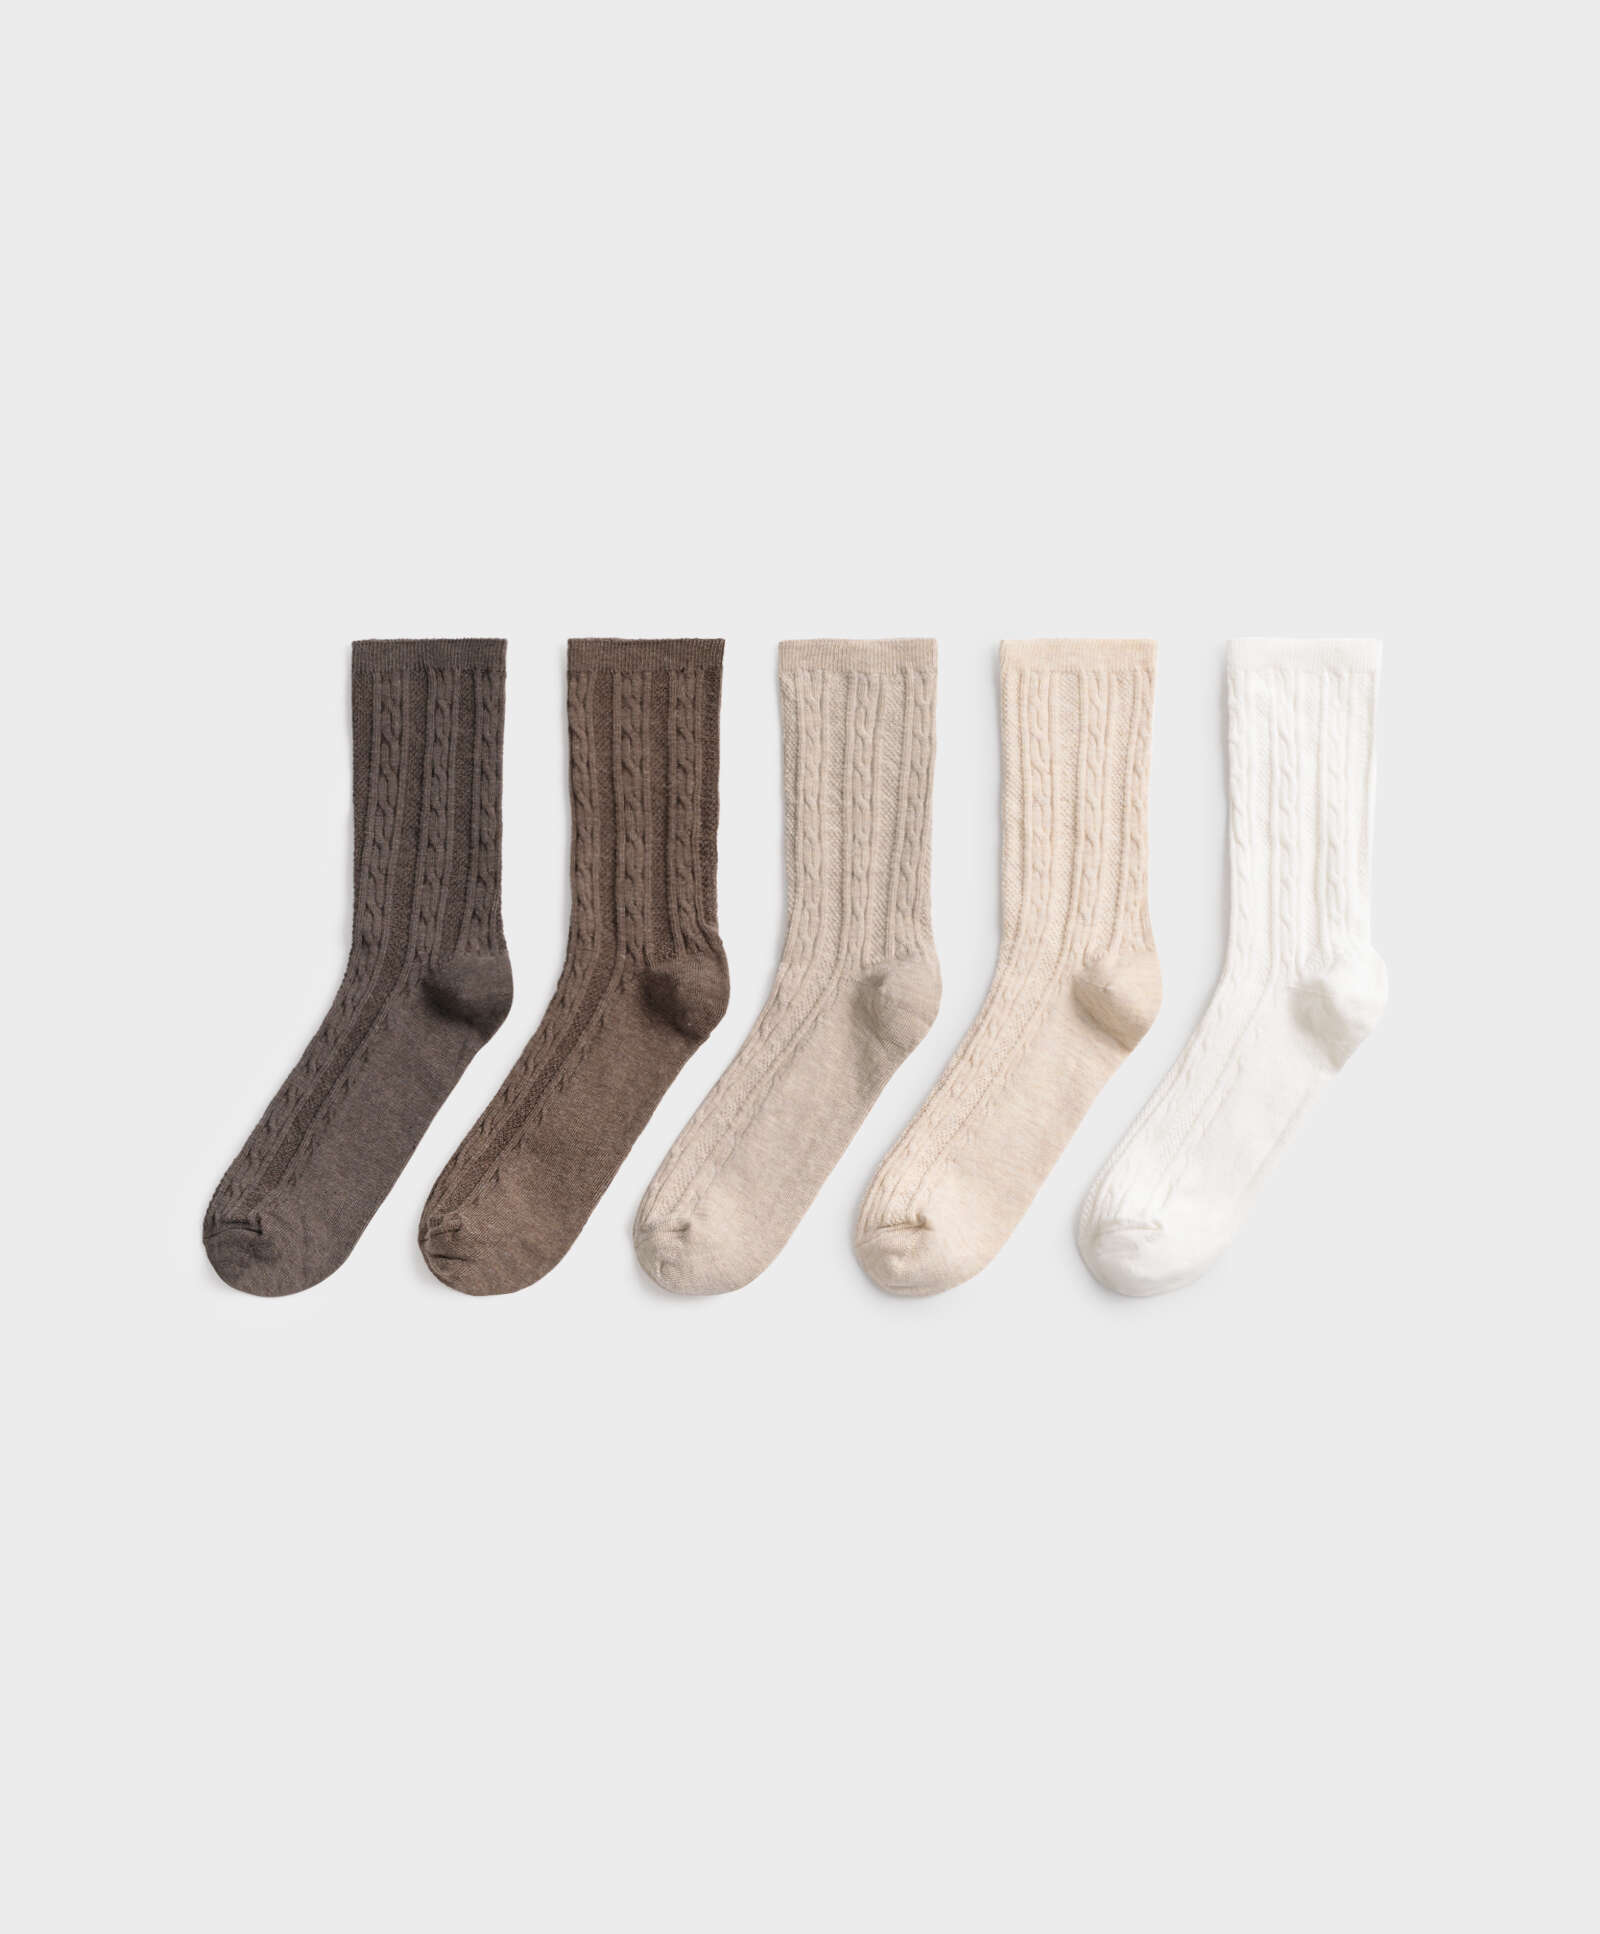 5 pairs of textured cotton socks